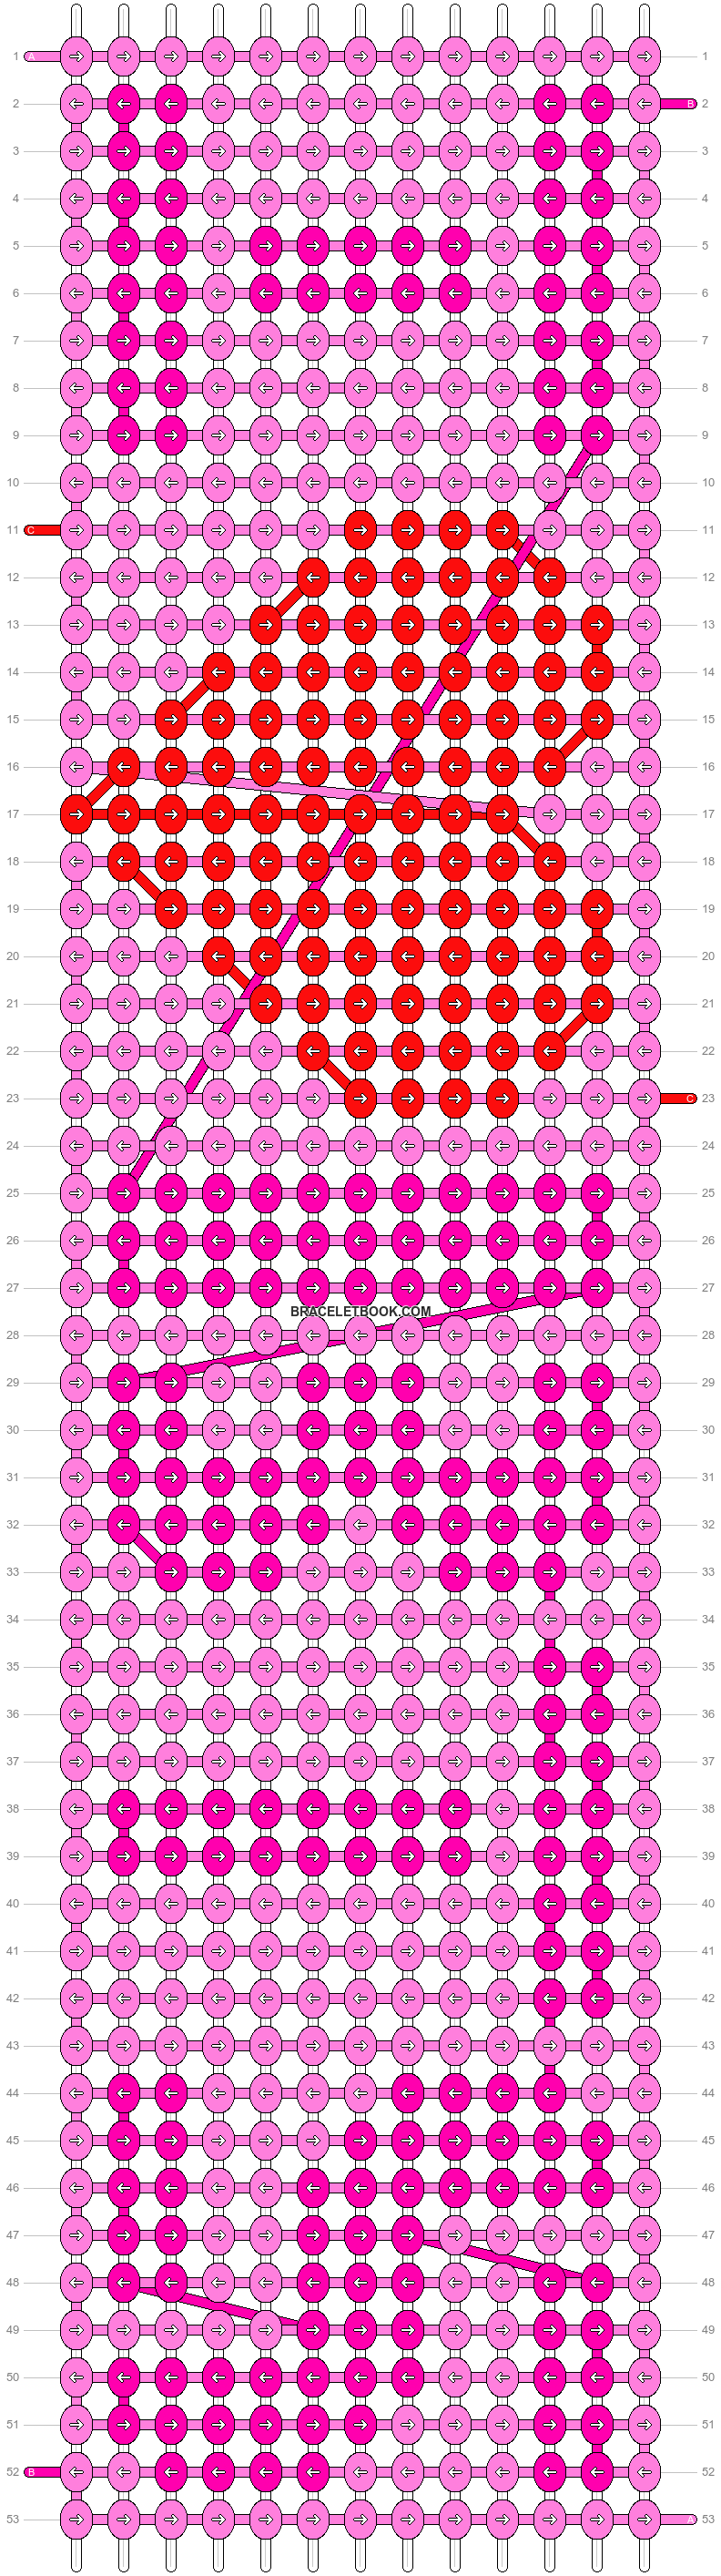 Alpha pattern #18455 variation #17577 pattern